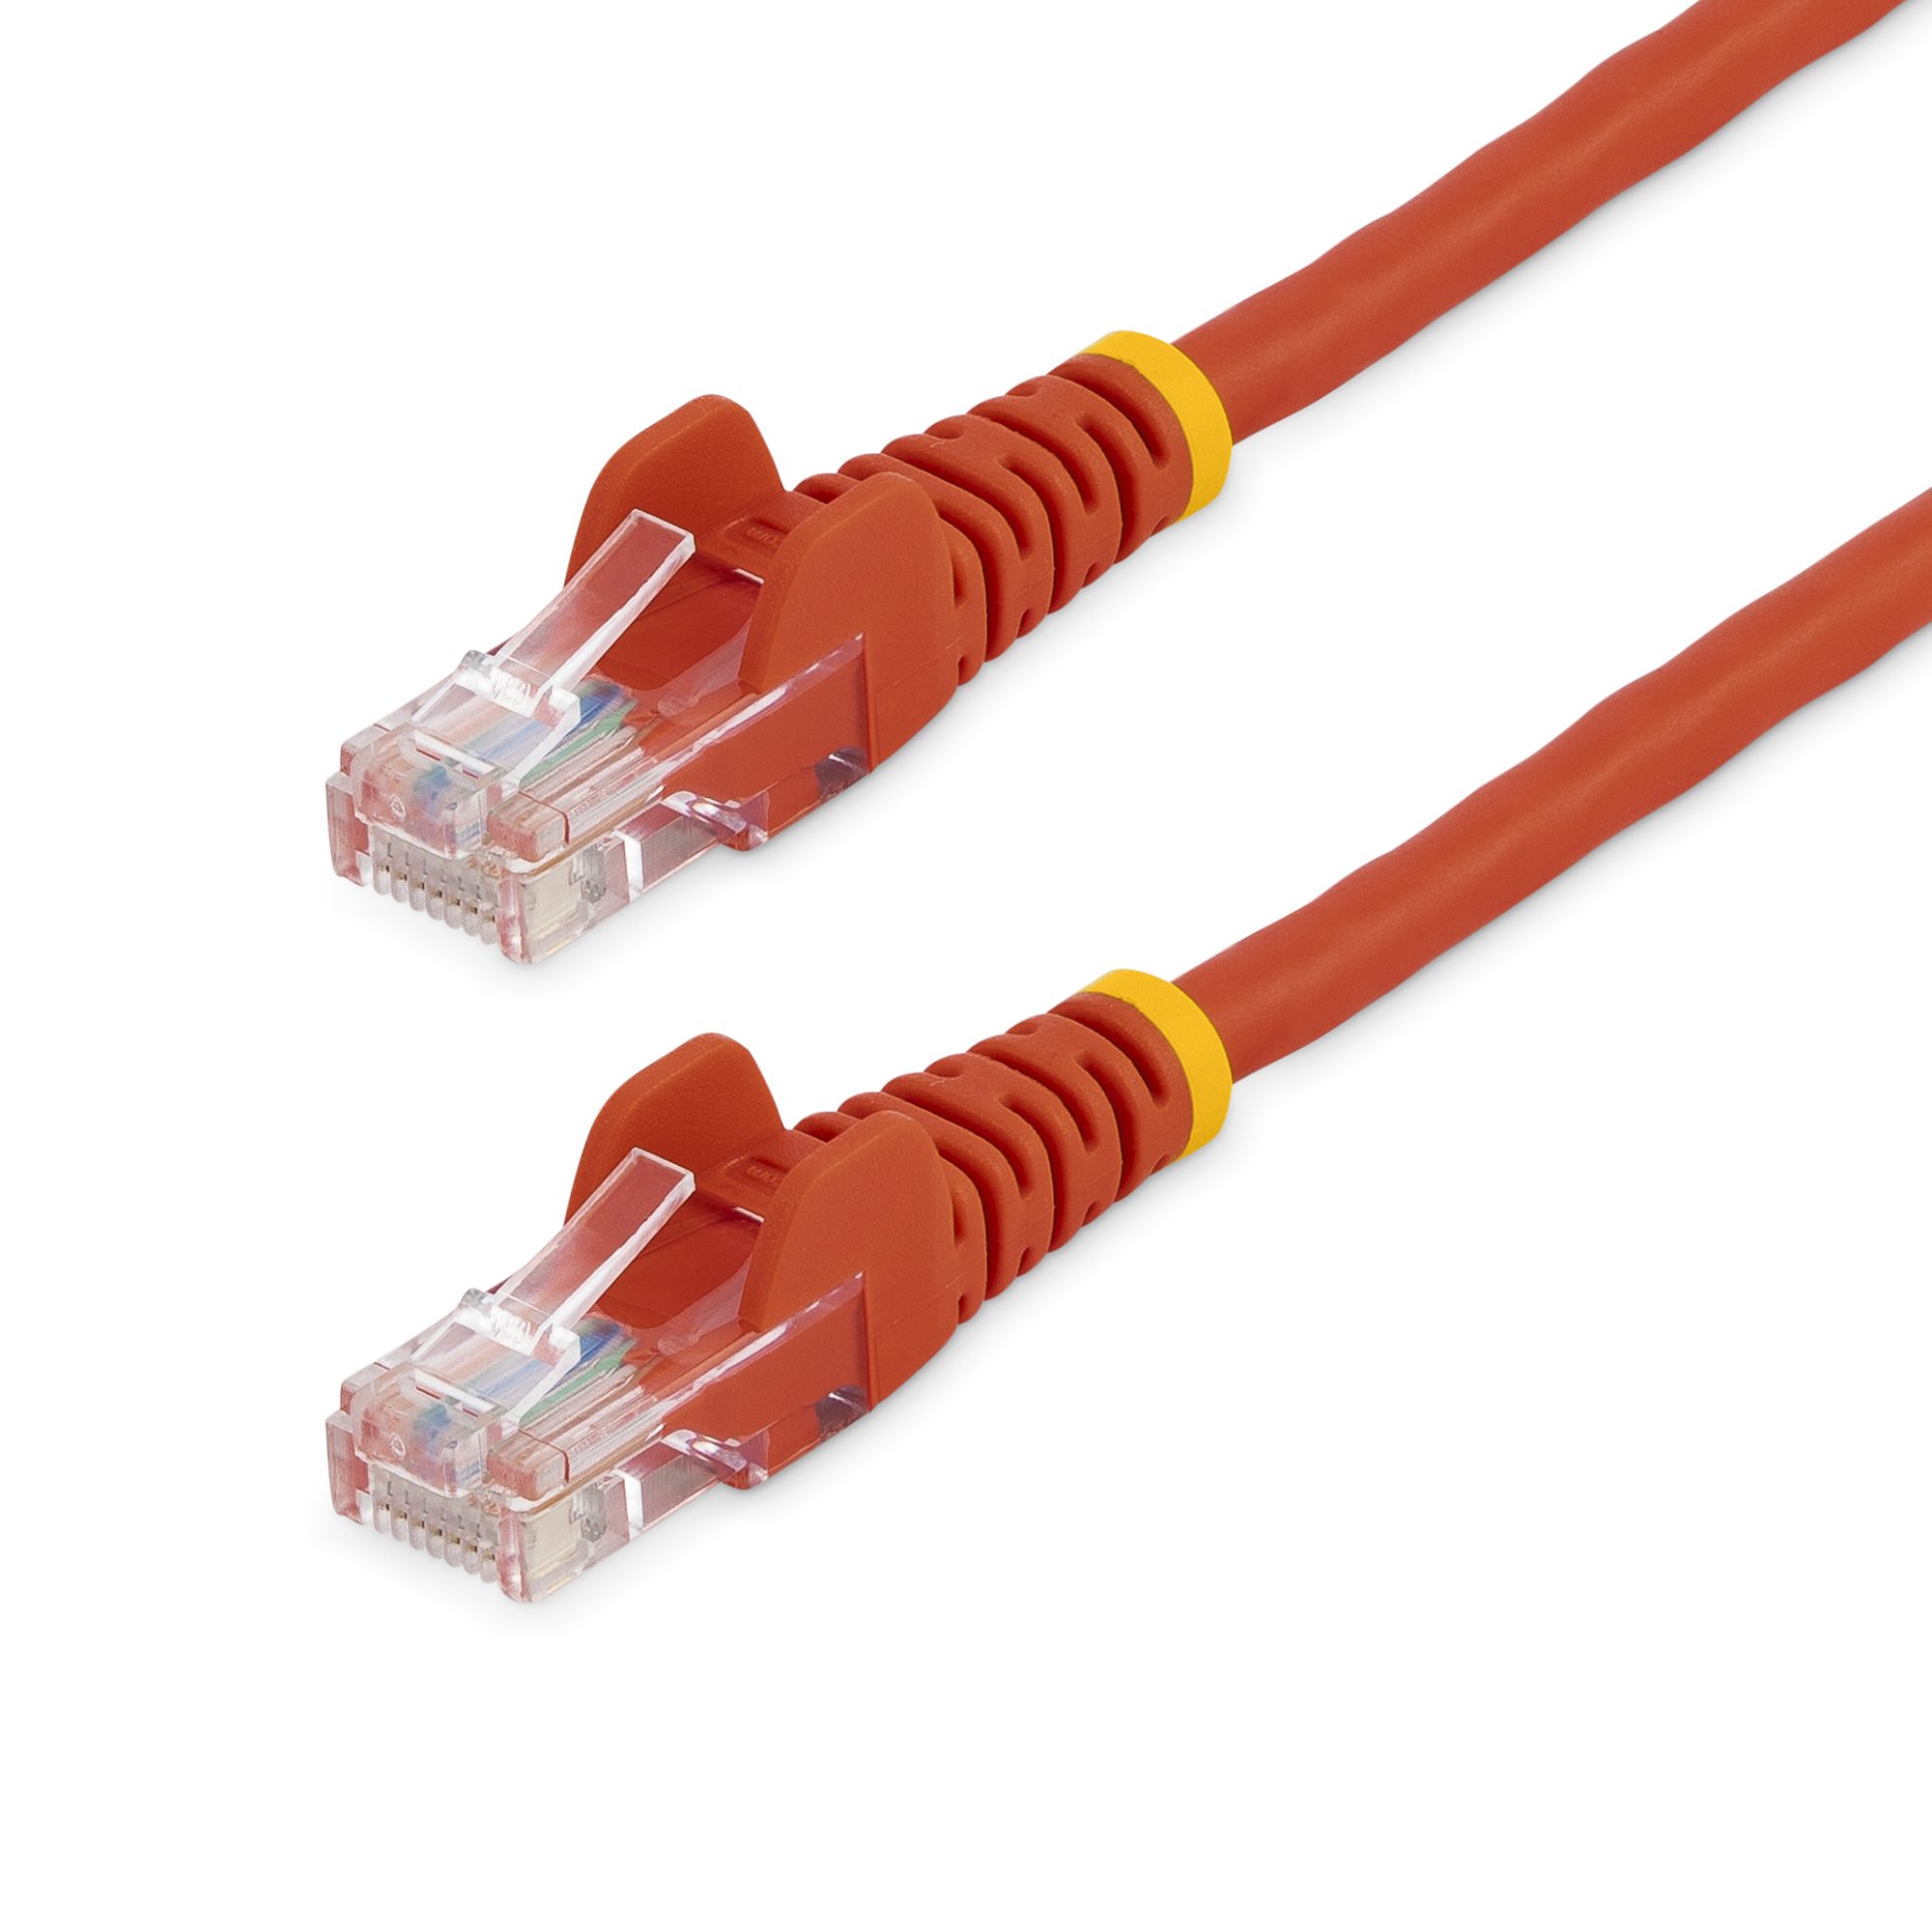 2 Meter LAN Network Ethernet Cable Grey Cat5e Rj45 Extension